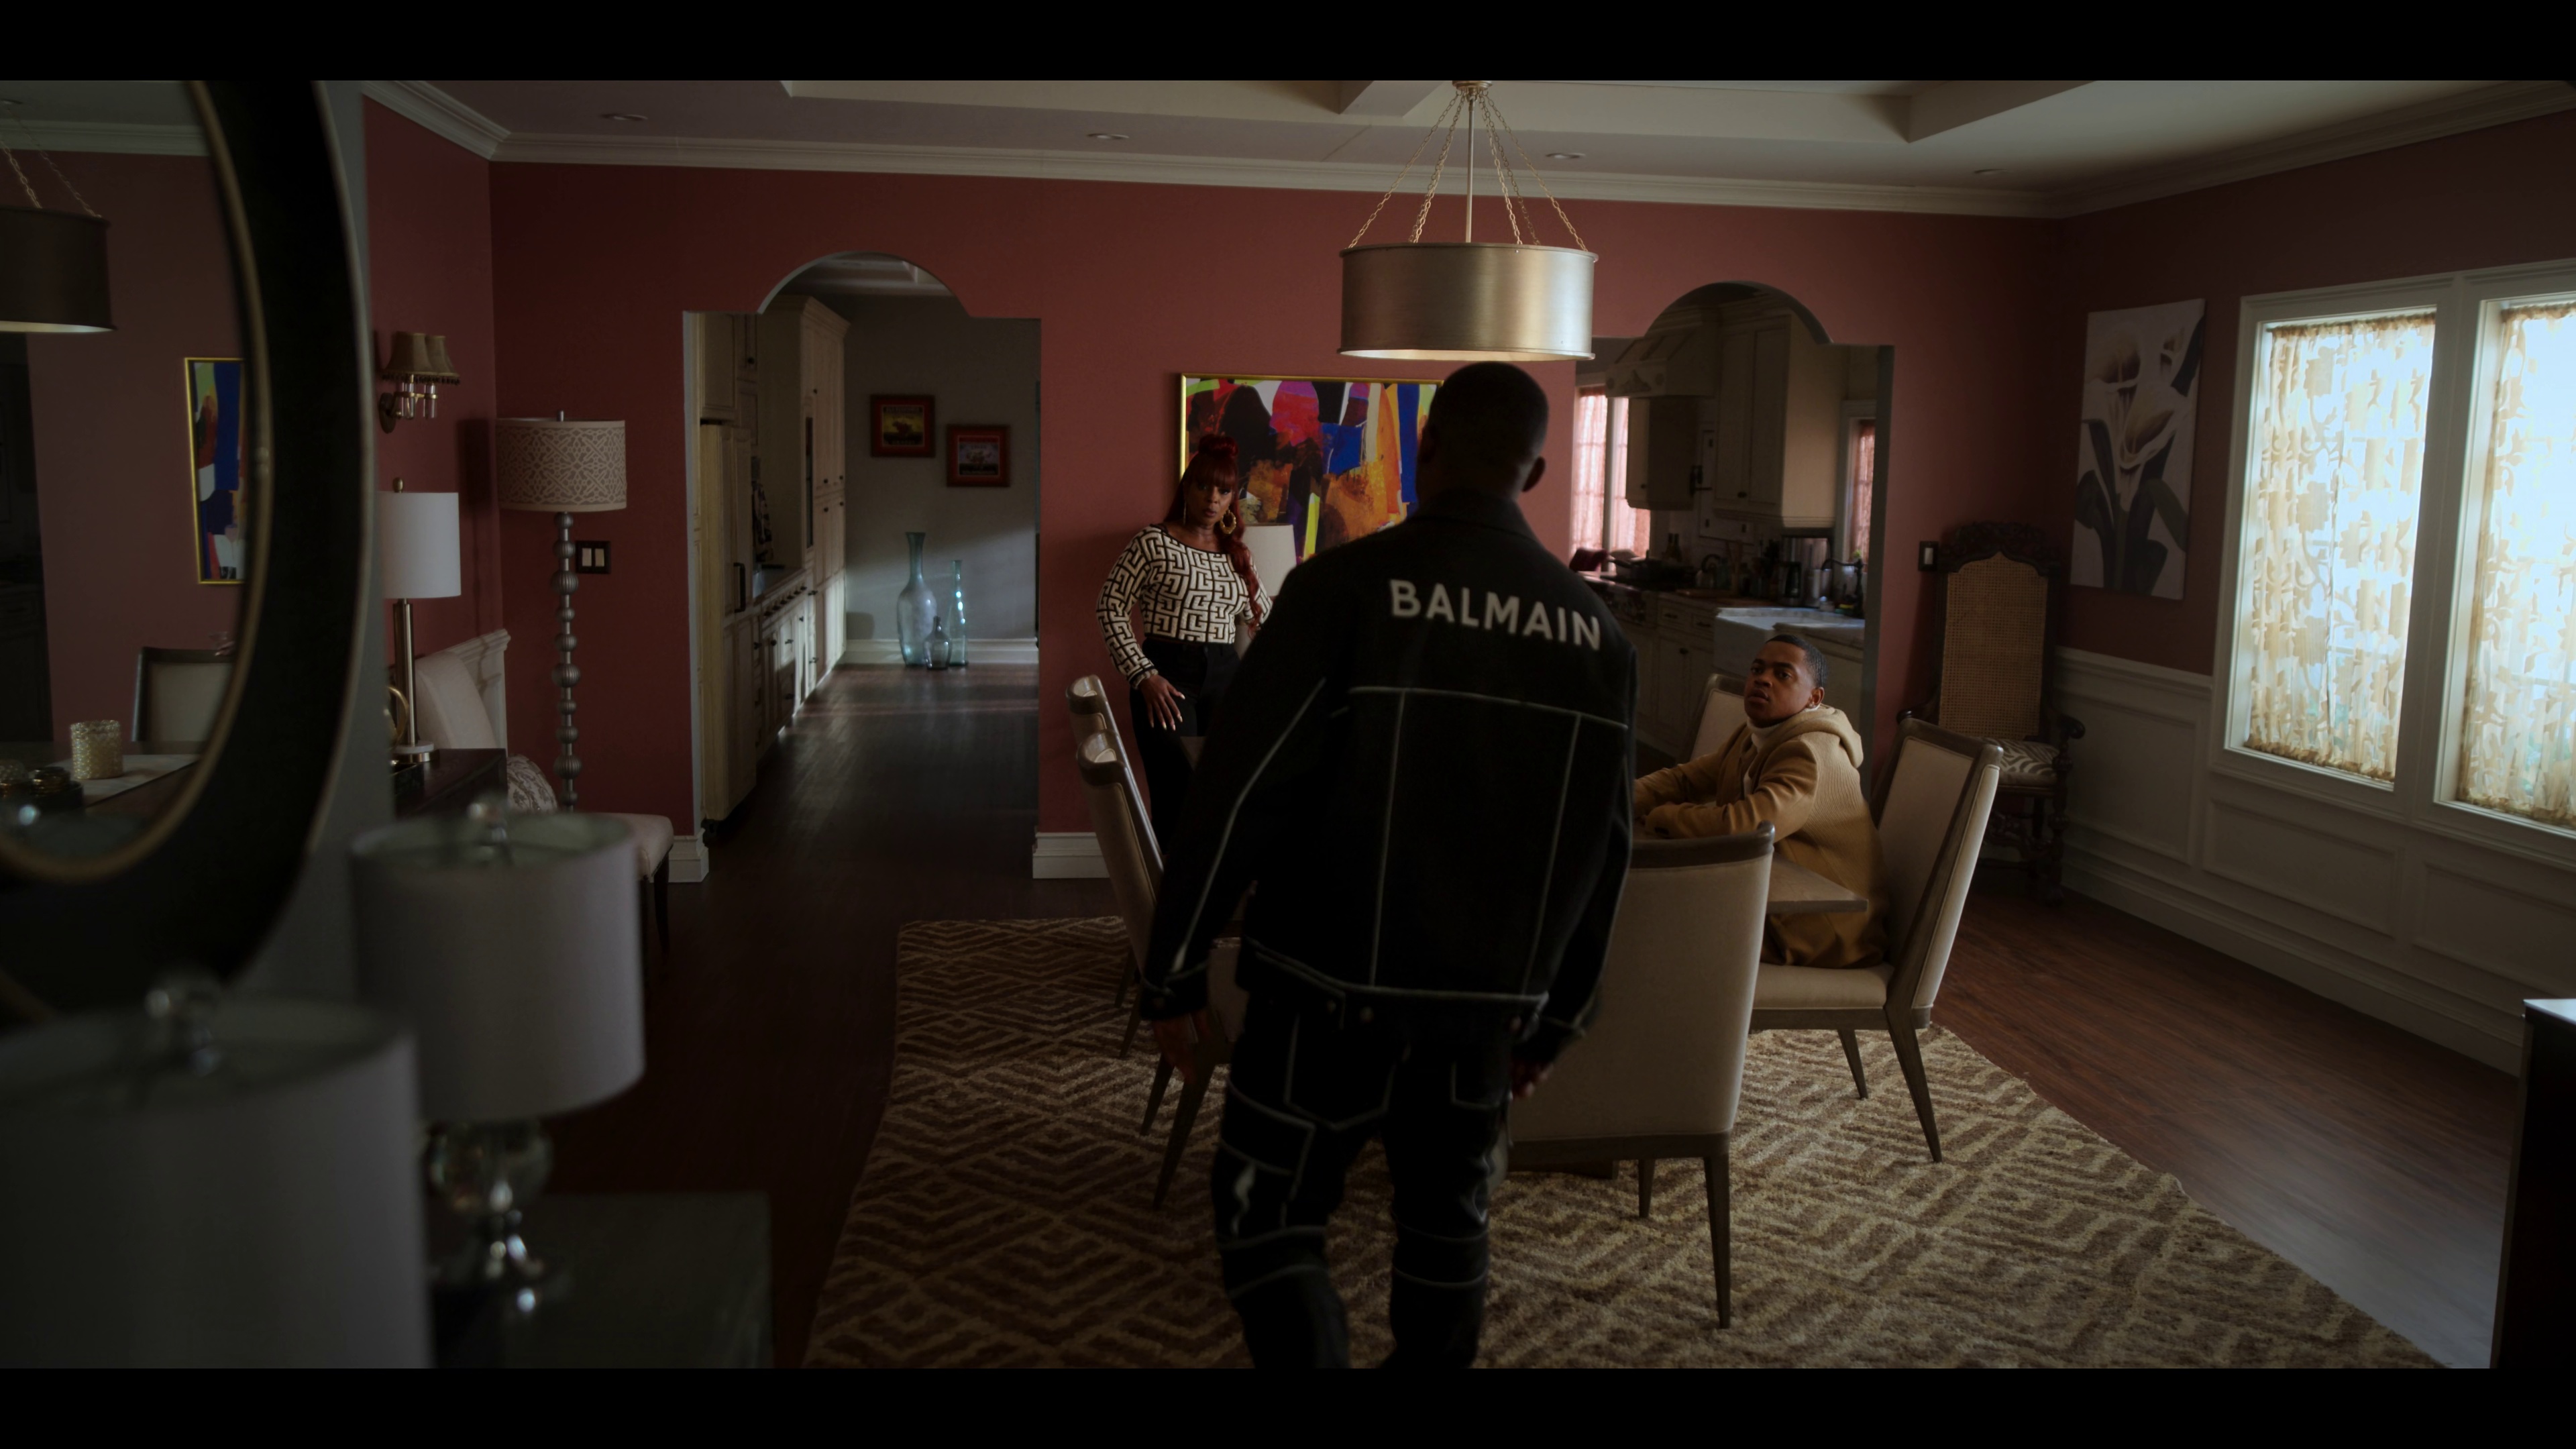 Givenchy logo-print denim jacket worn by Cane Tejada (Woody McClain) as  seen in Power Book II: Ghost TV series wardrobe (Season 2 Episode 4)